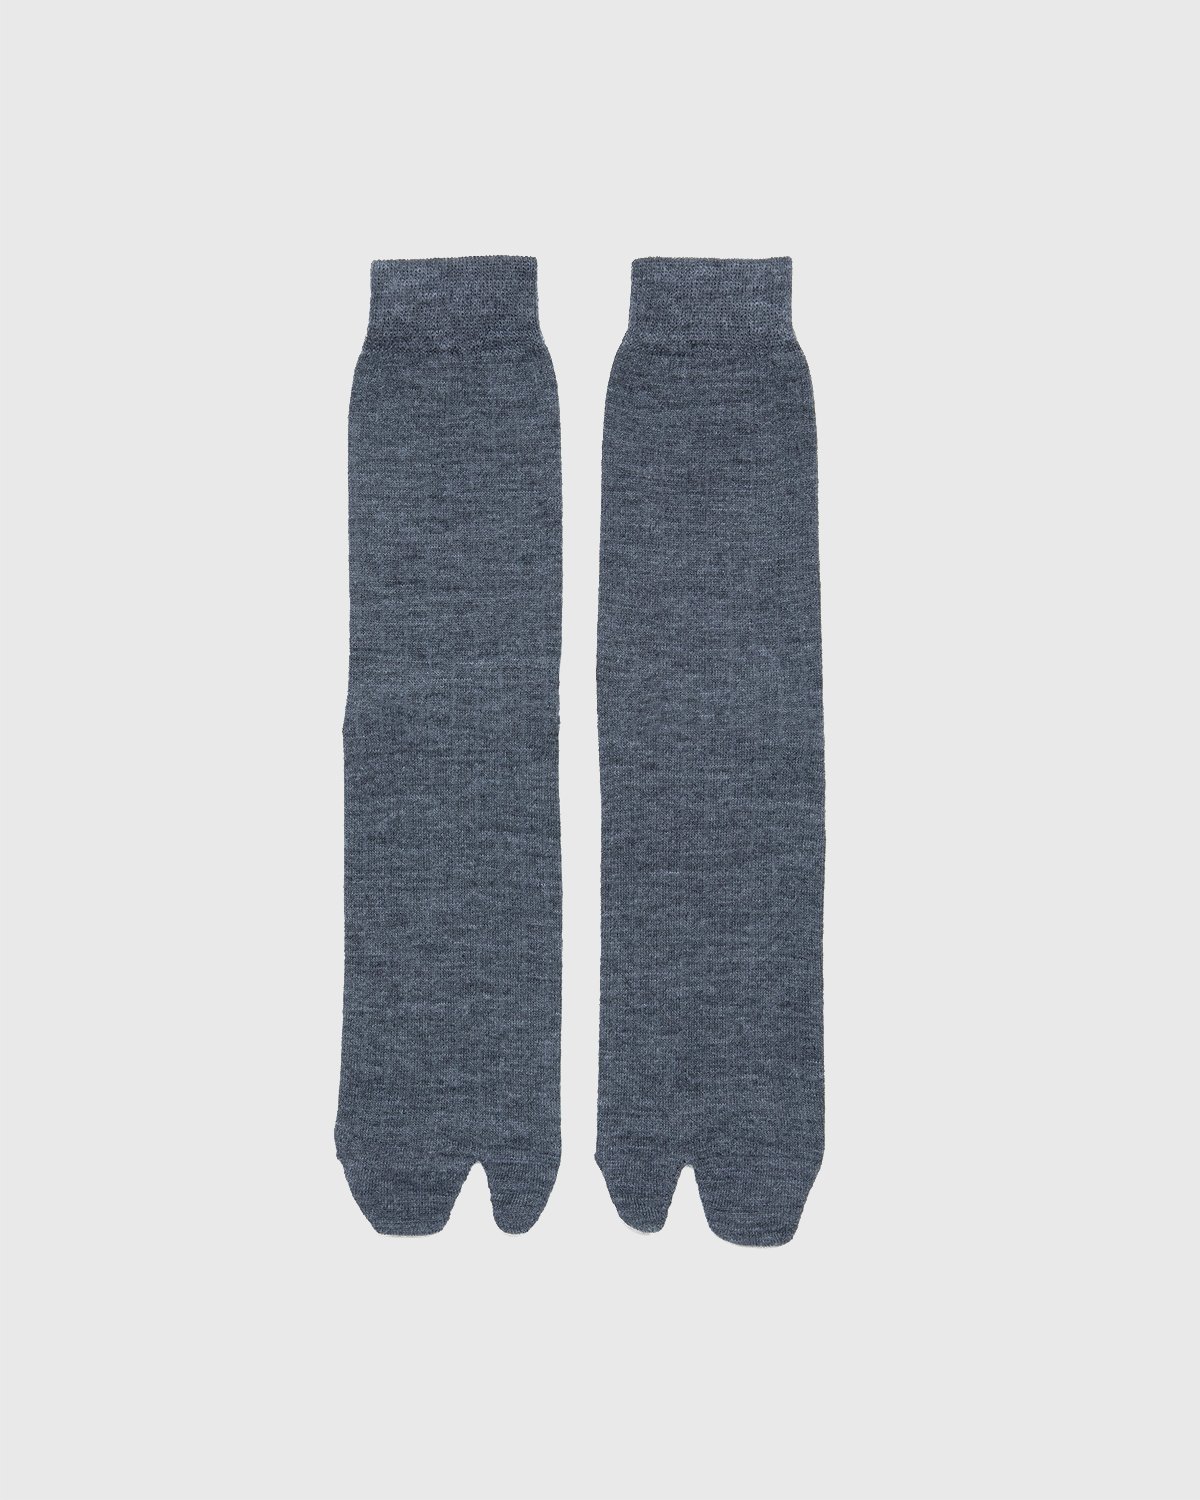 Maison Margiela - Tabi Socks Grey - Accessories - Grey - Image 1